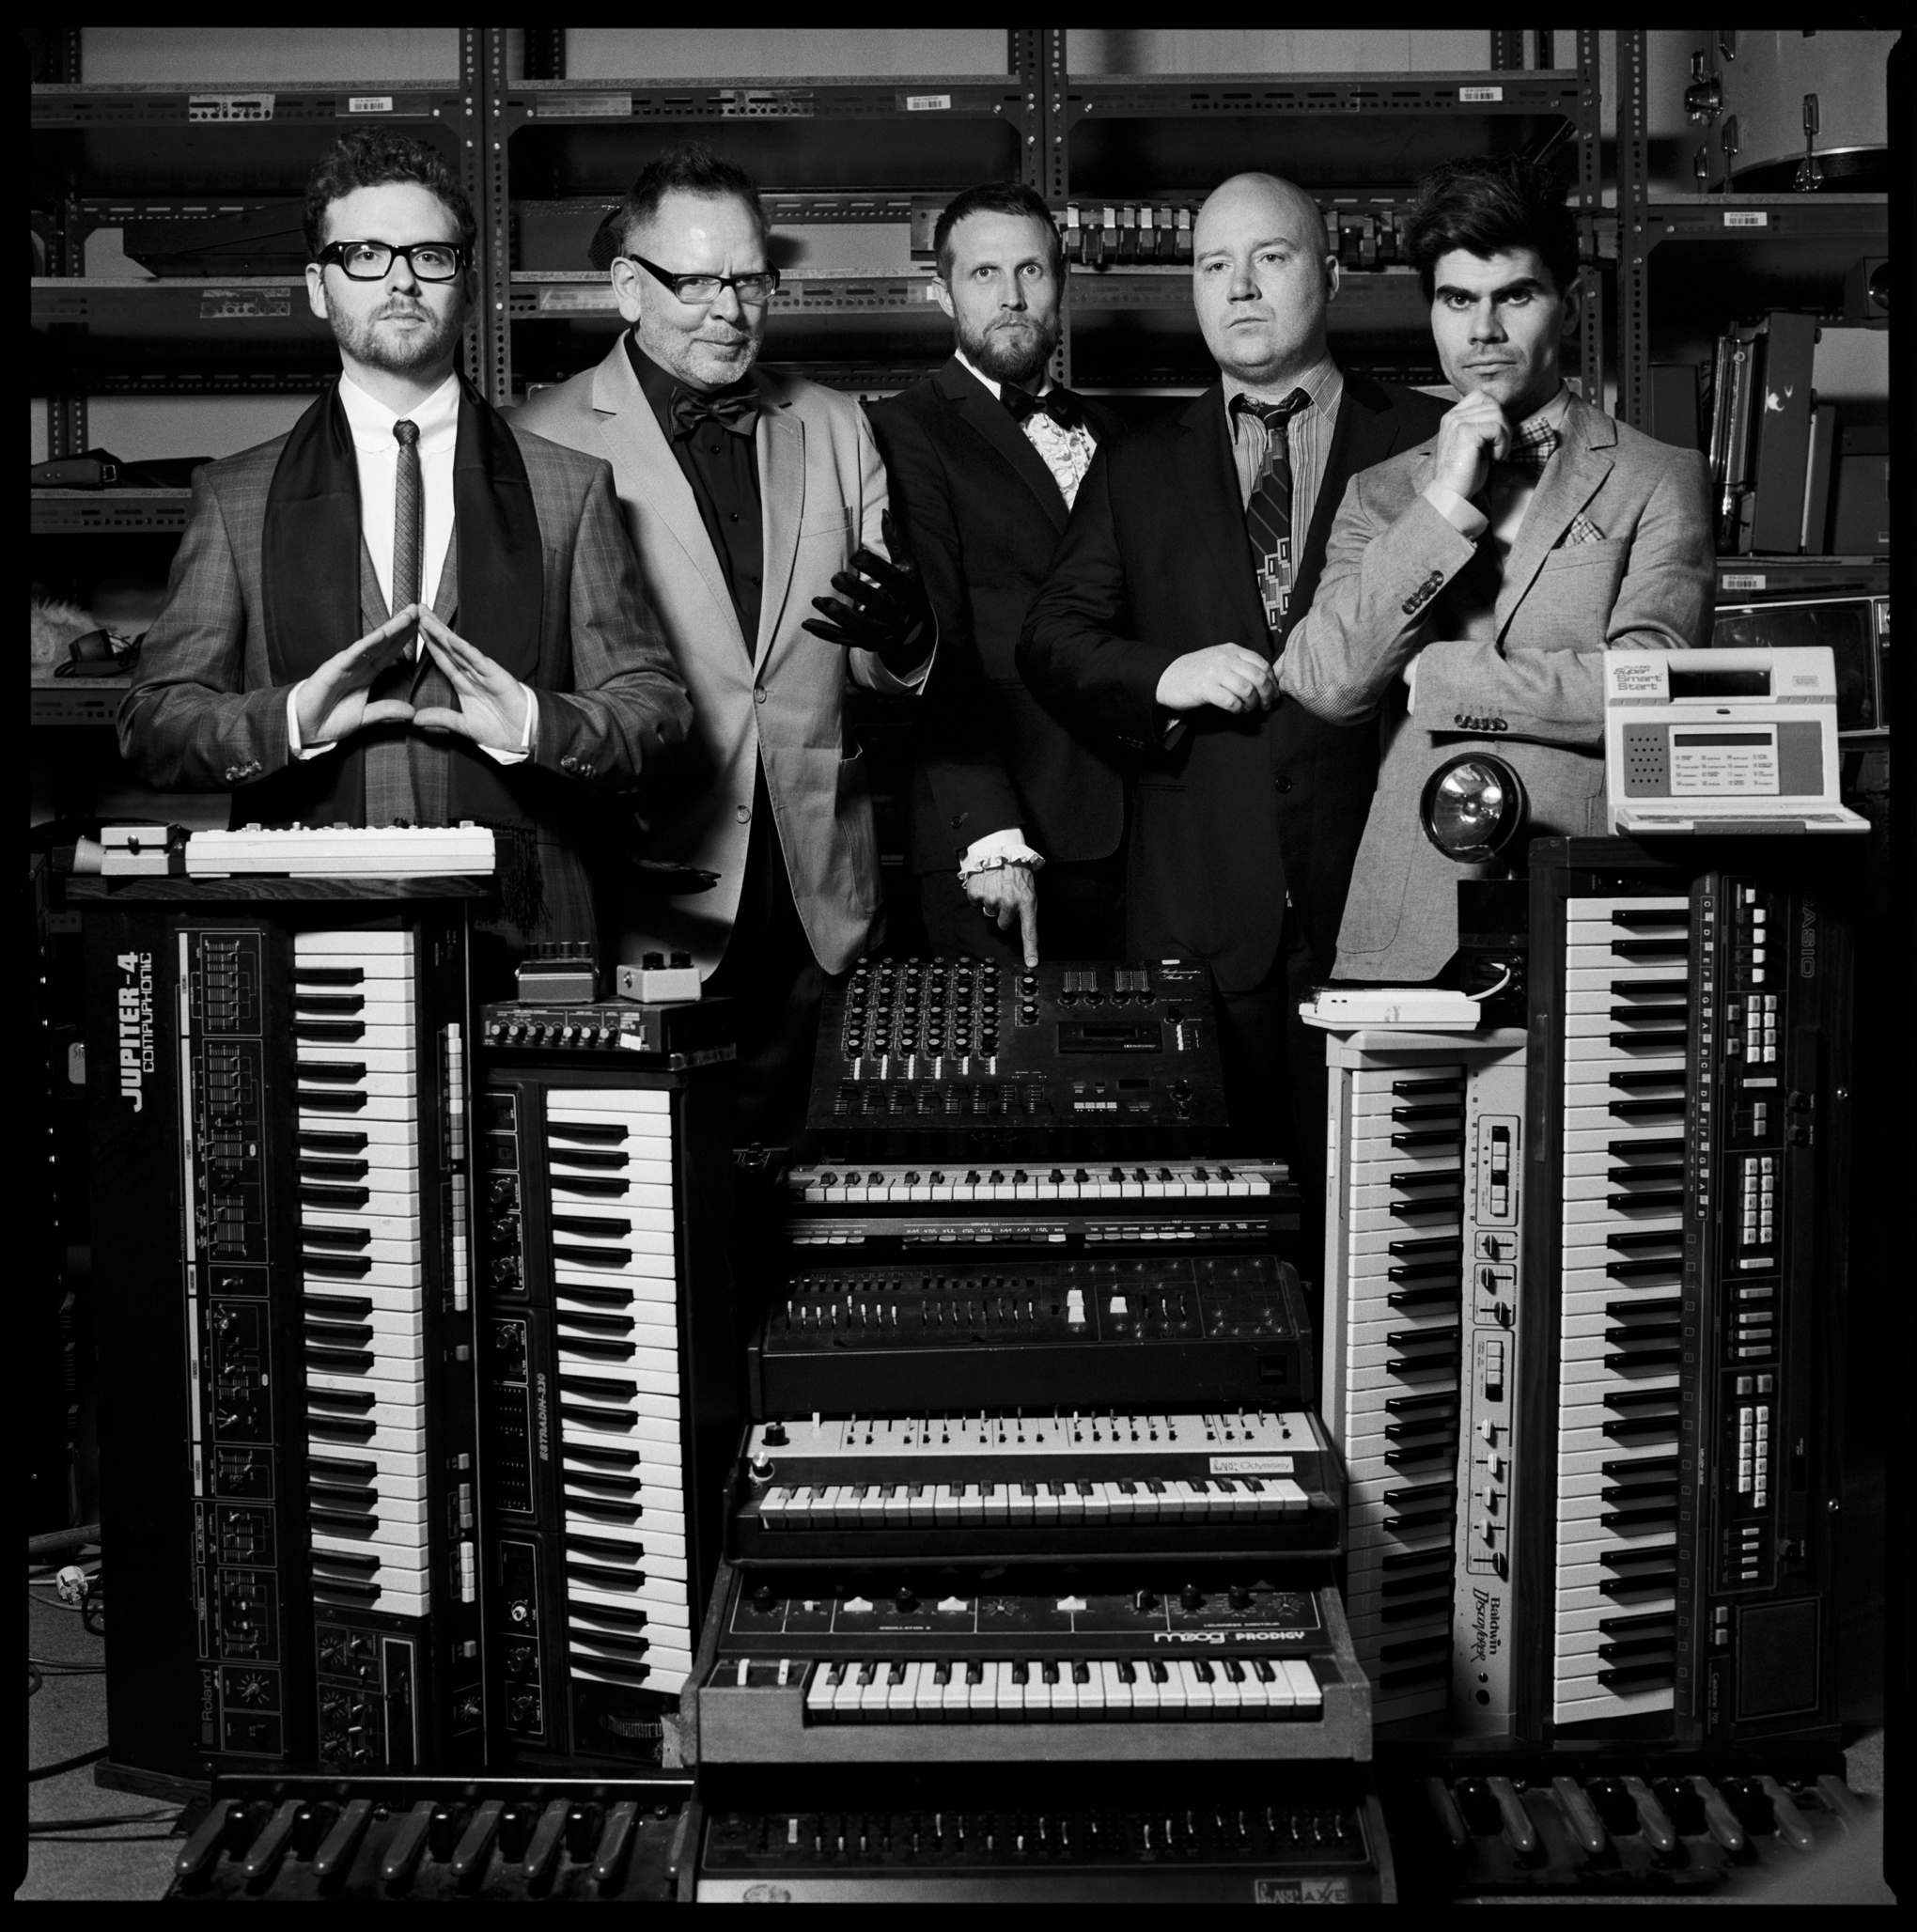 Apparat Organ Quartet